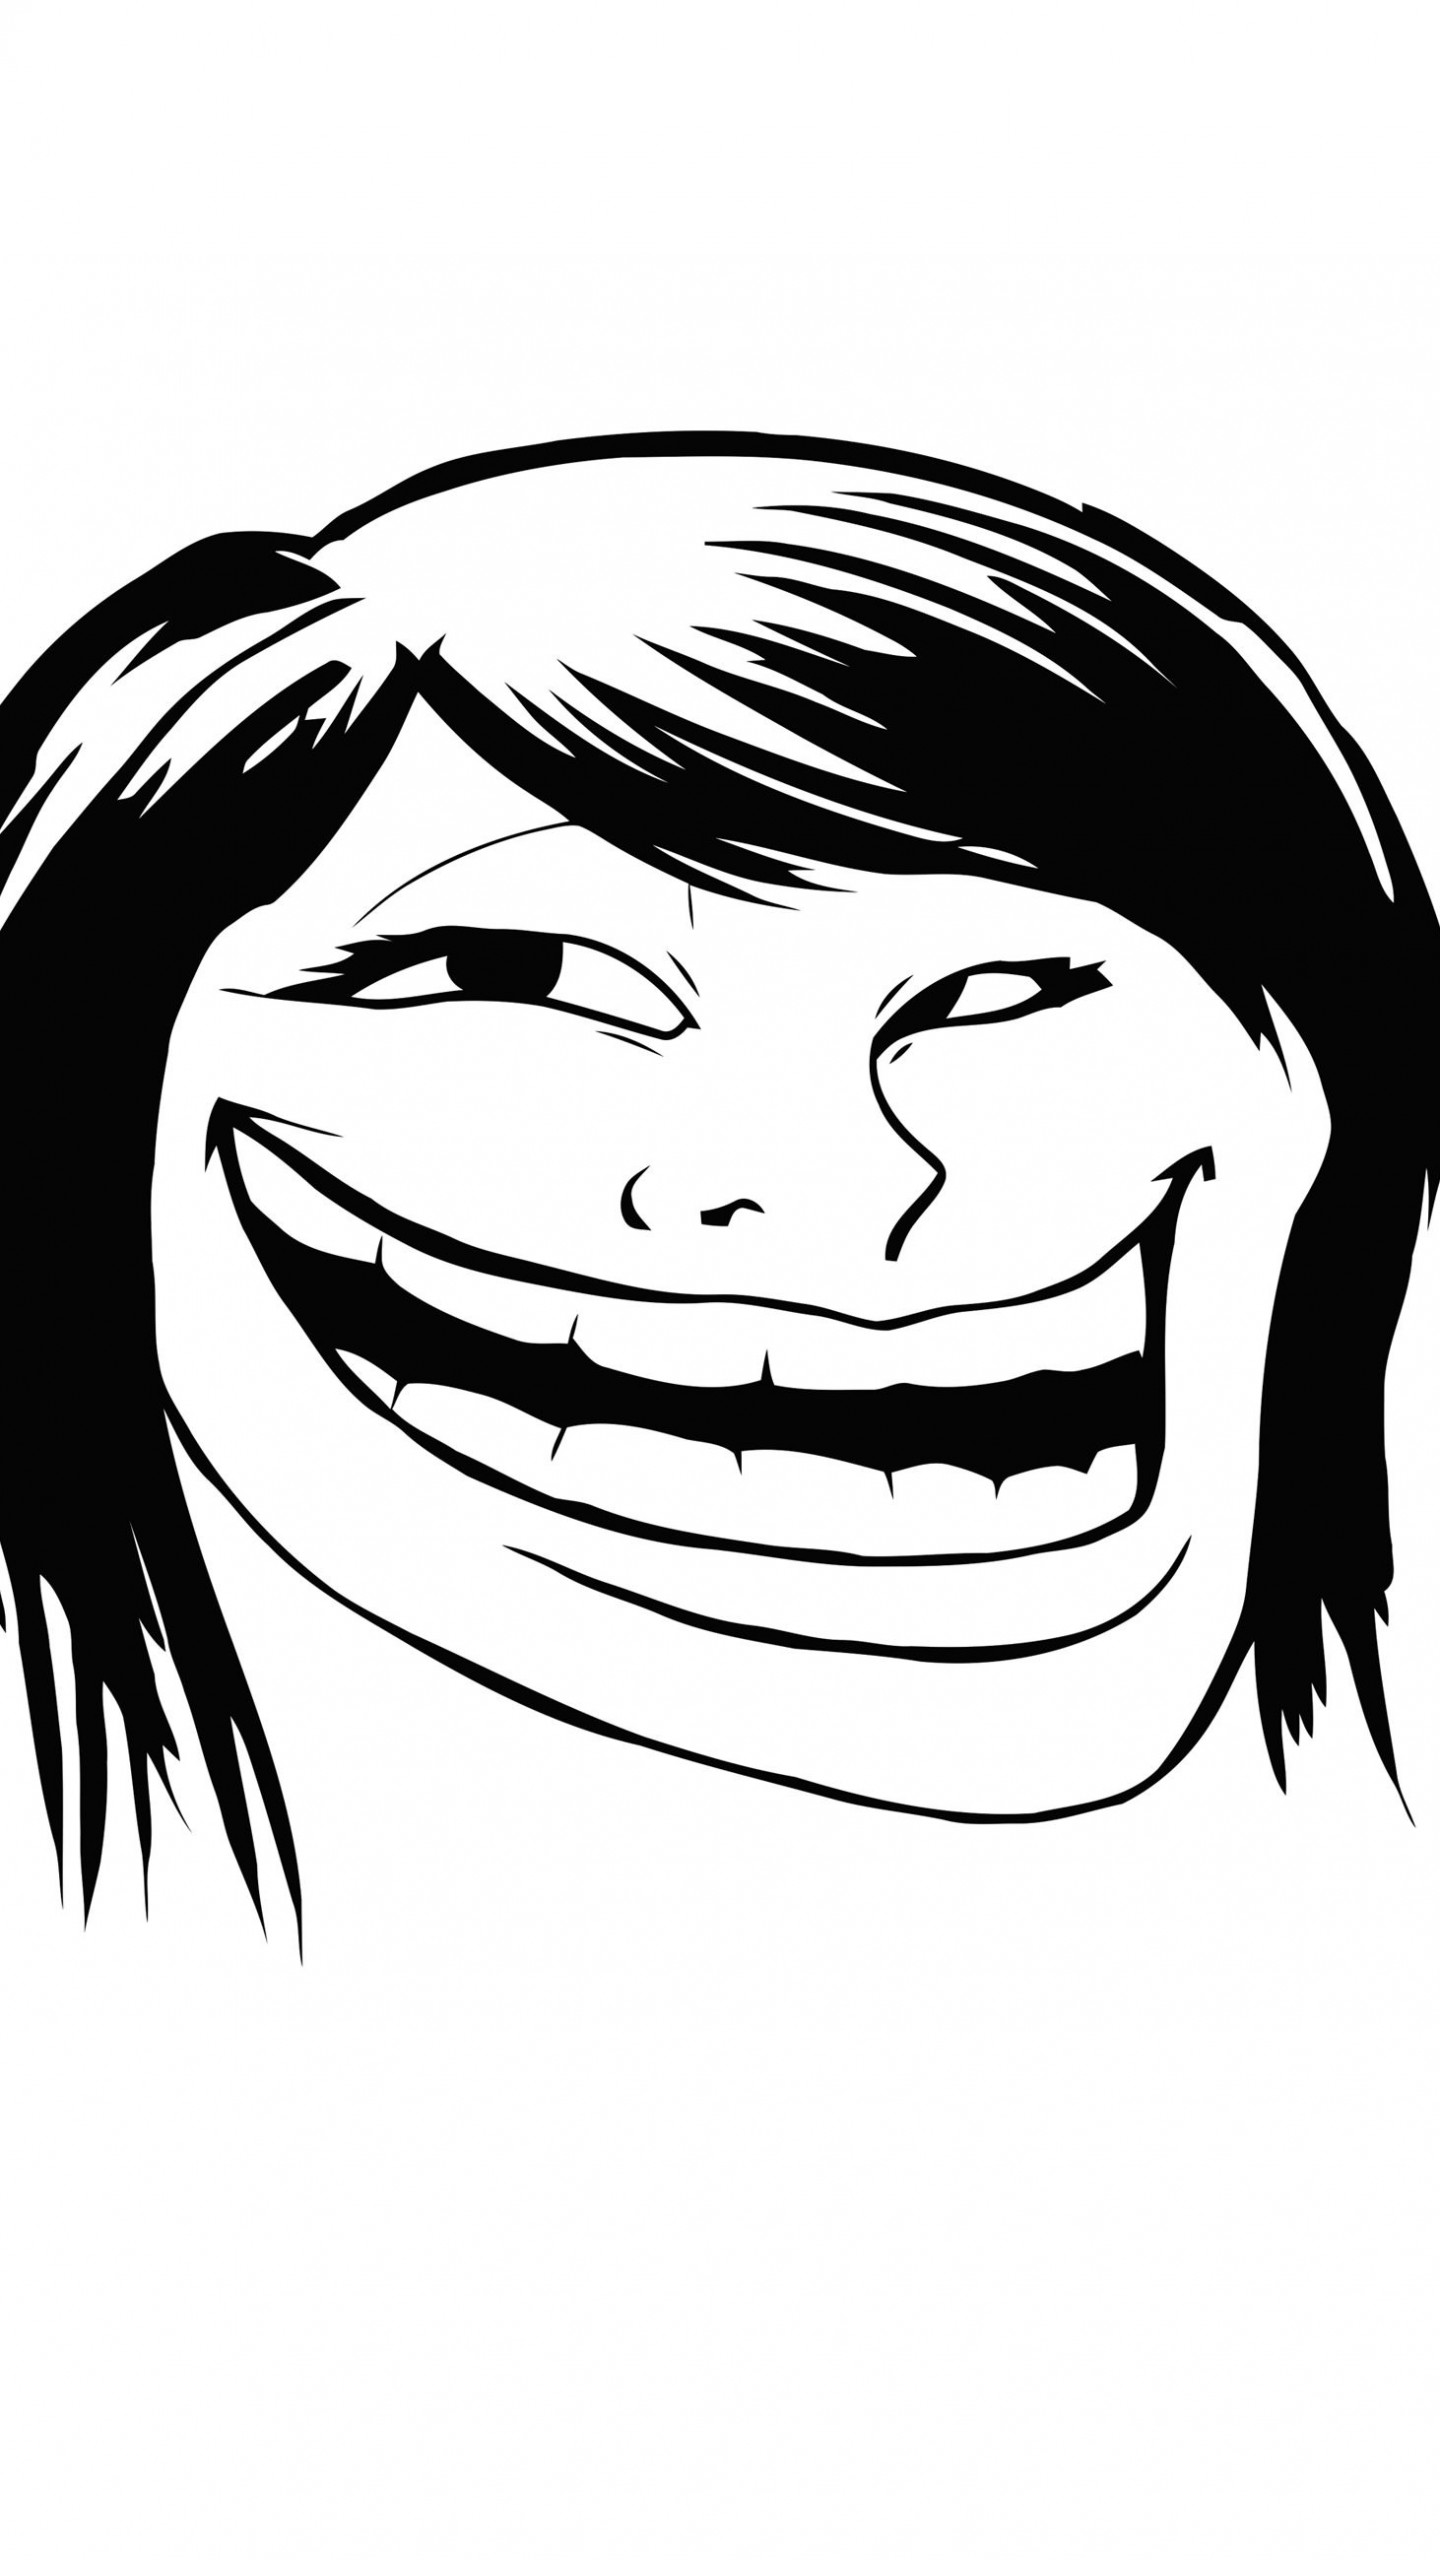 Female Troll Face Meme Wallpaper for SAMSUNG Galaxy Note 4